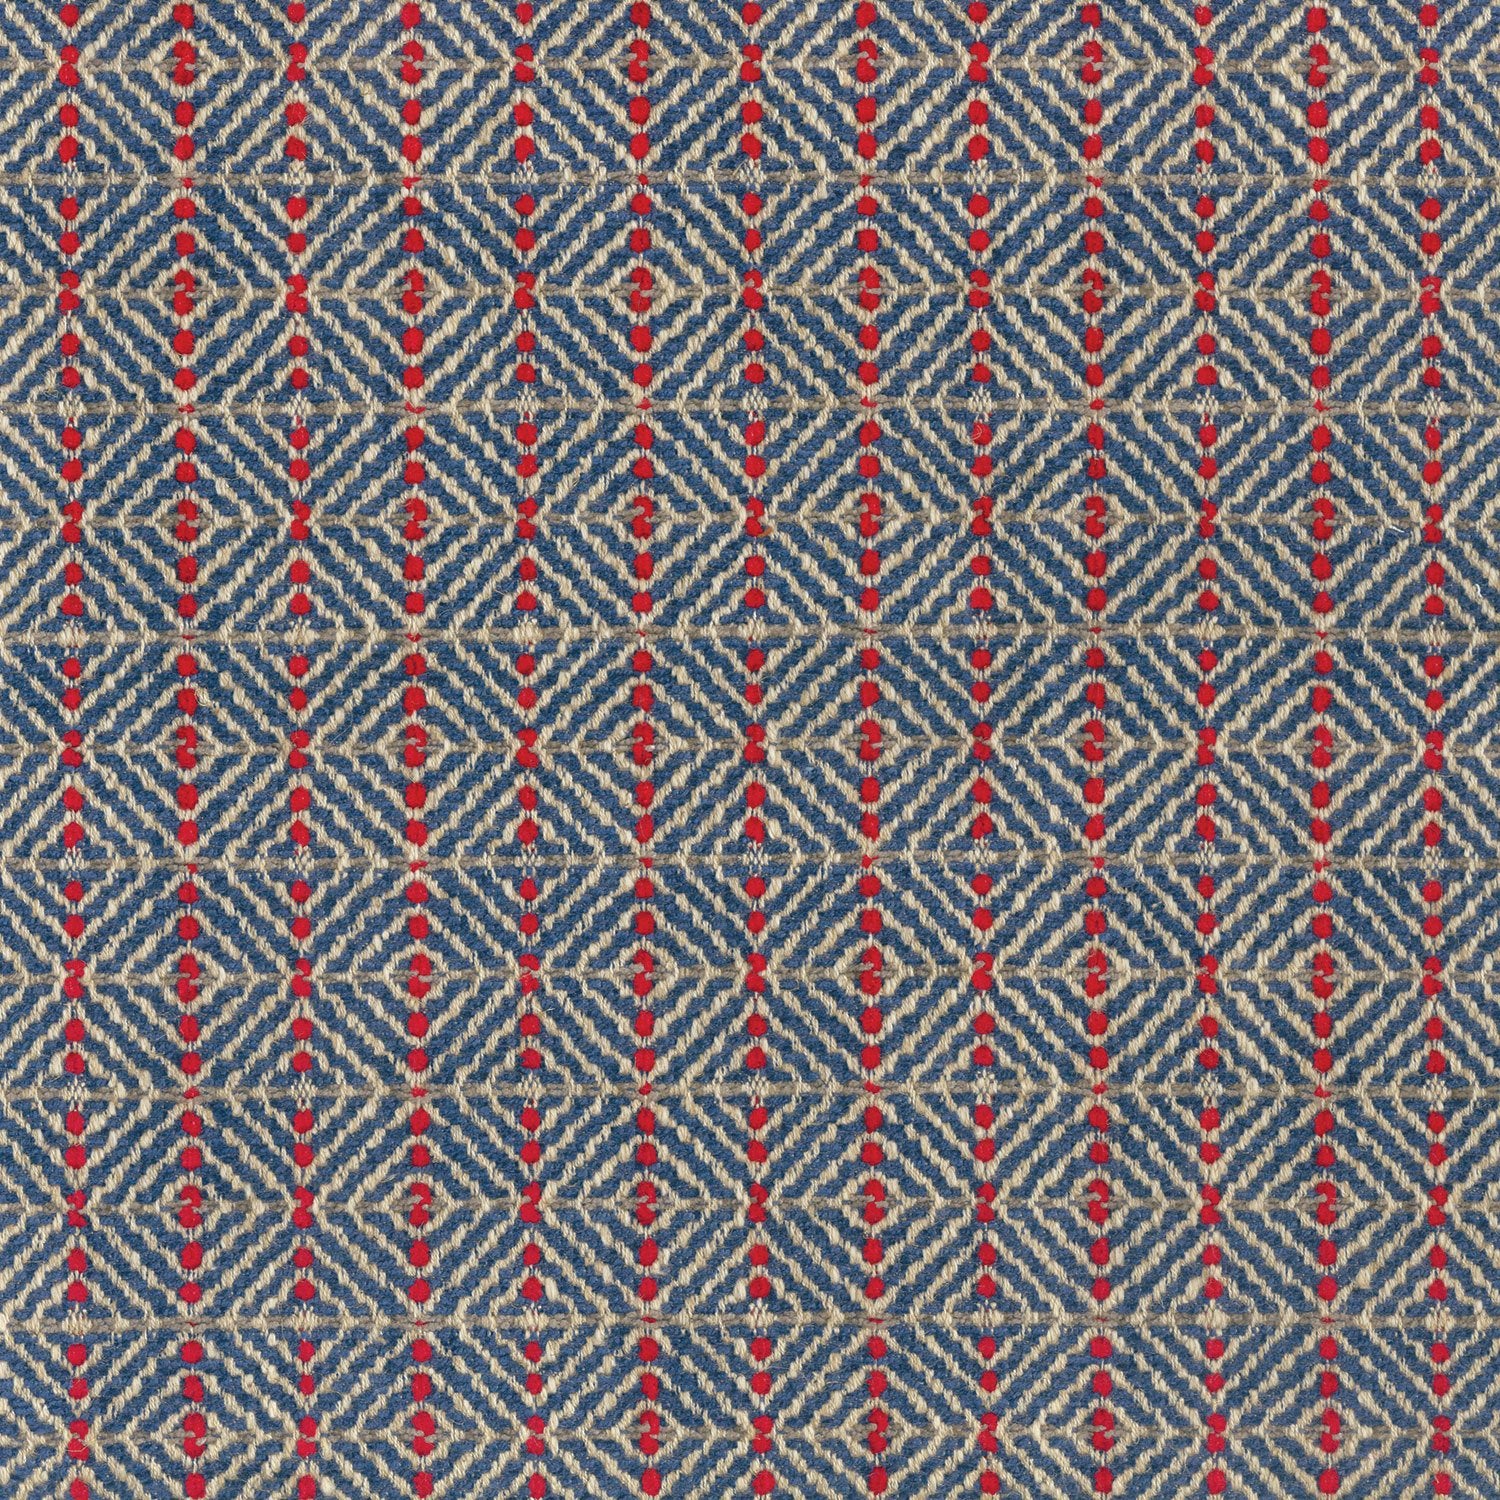 Nina Campbell Fabric - Umbria Todi Blue/Red/Beige NCF4262-04